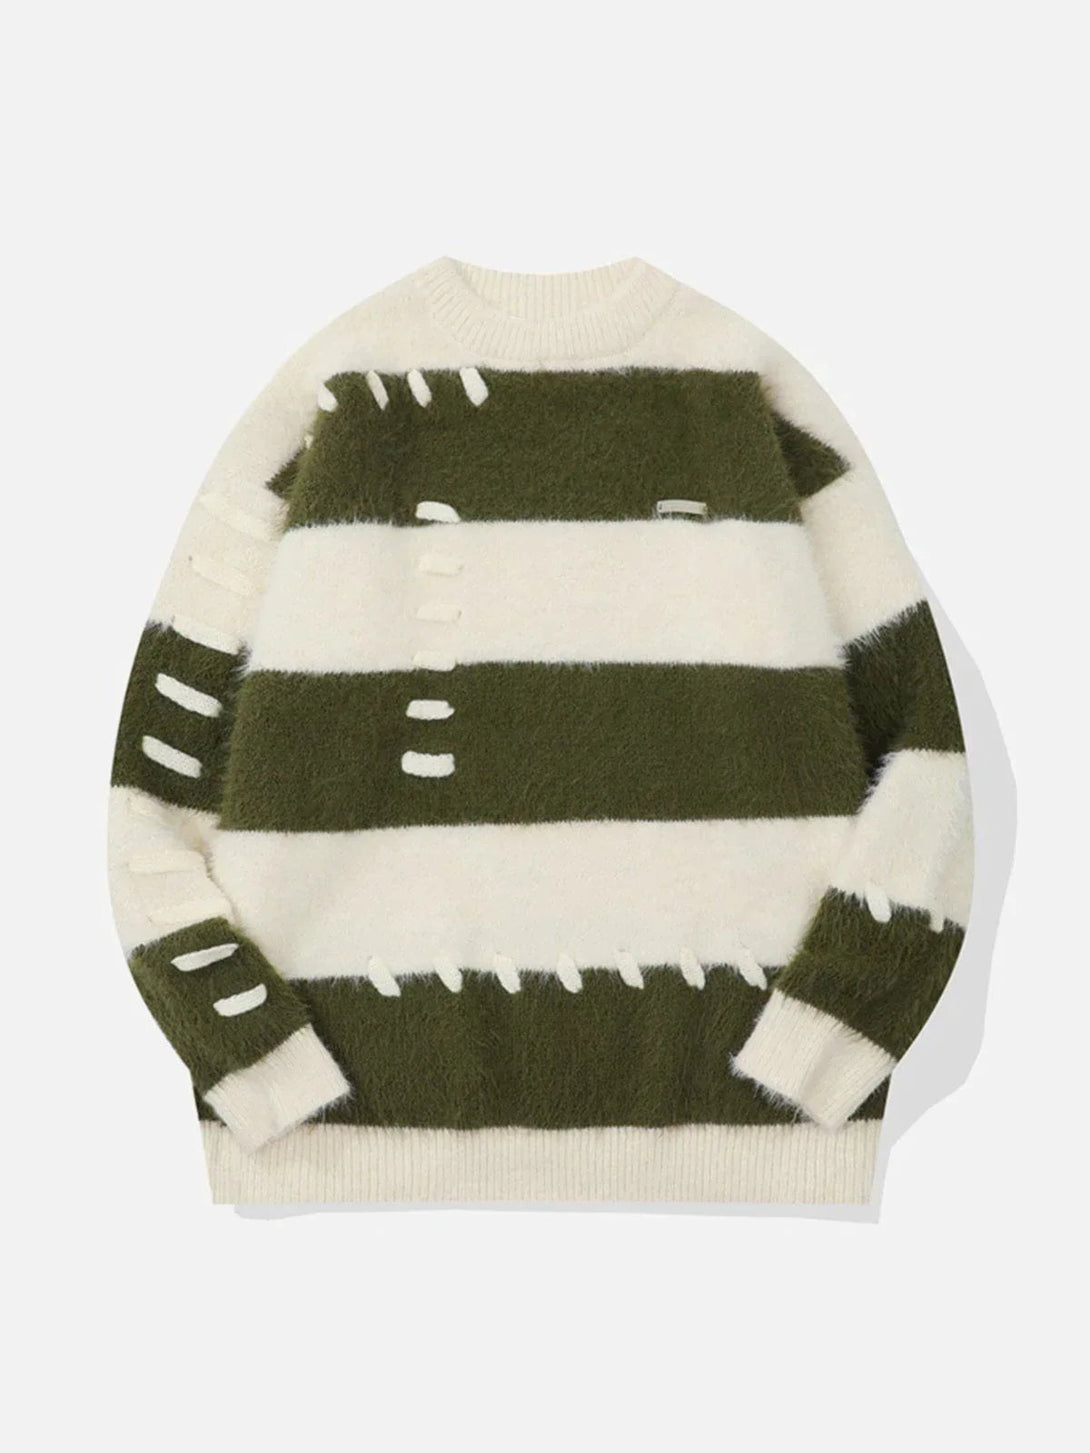 Majesda® - Mohair Stripe Sweater outfit ideas streetwear fashion